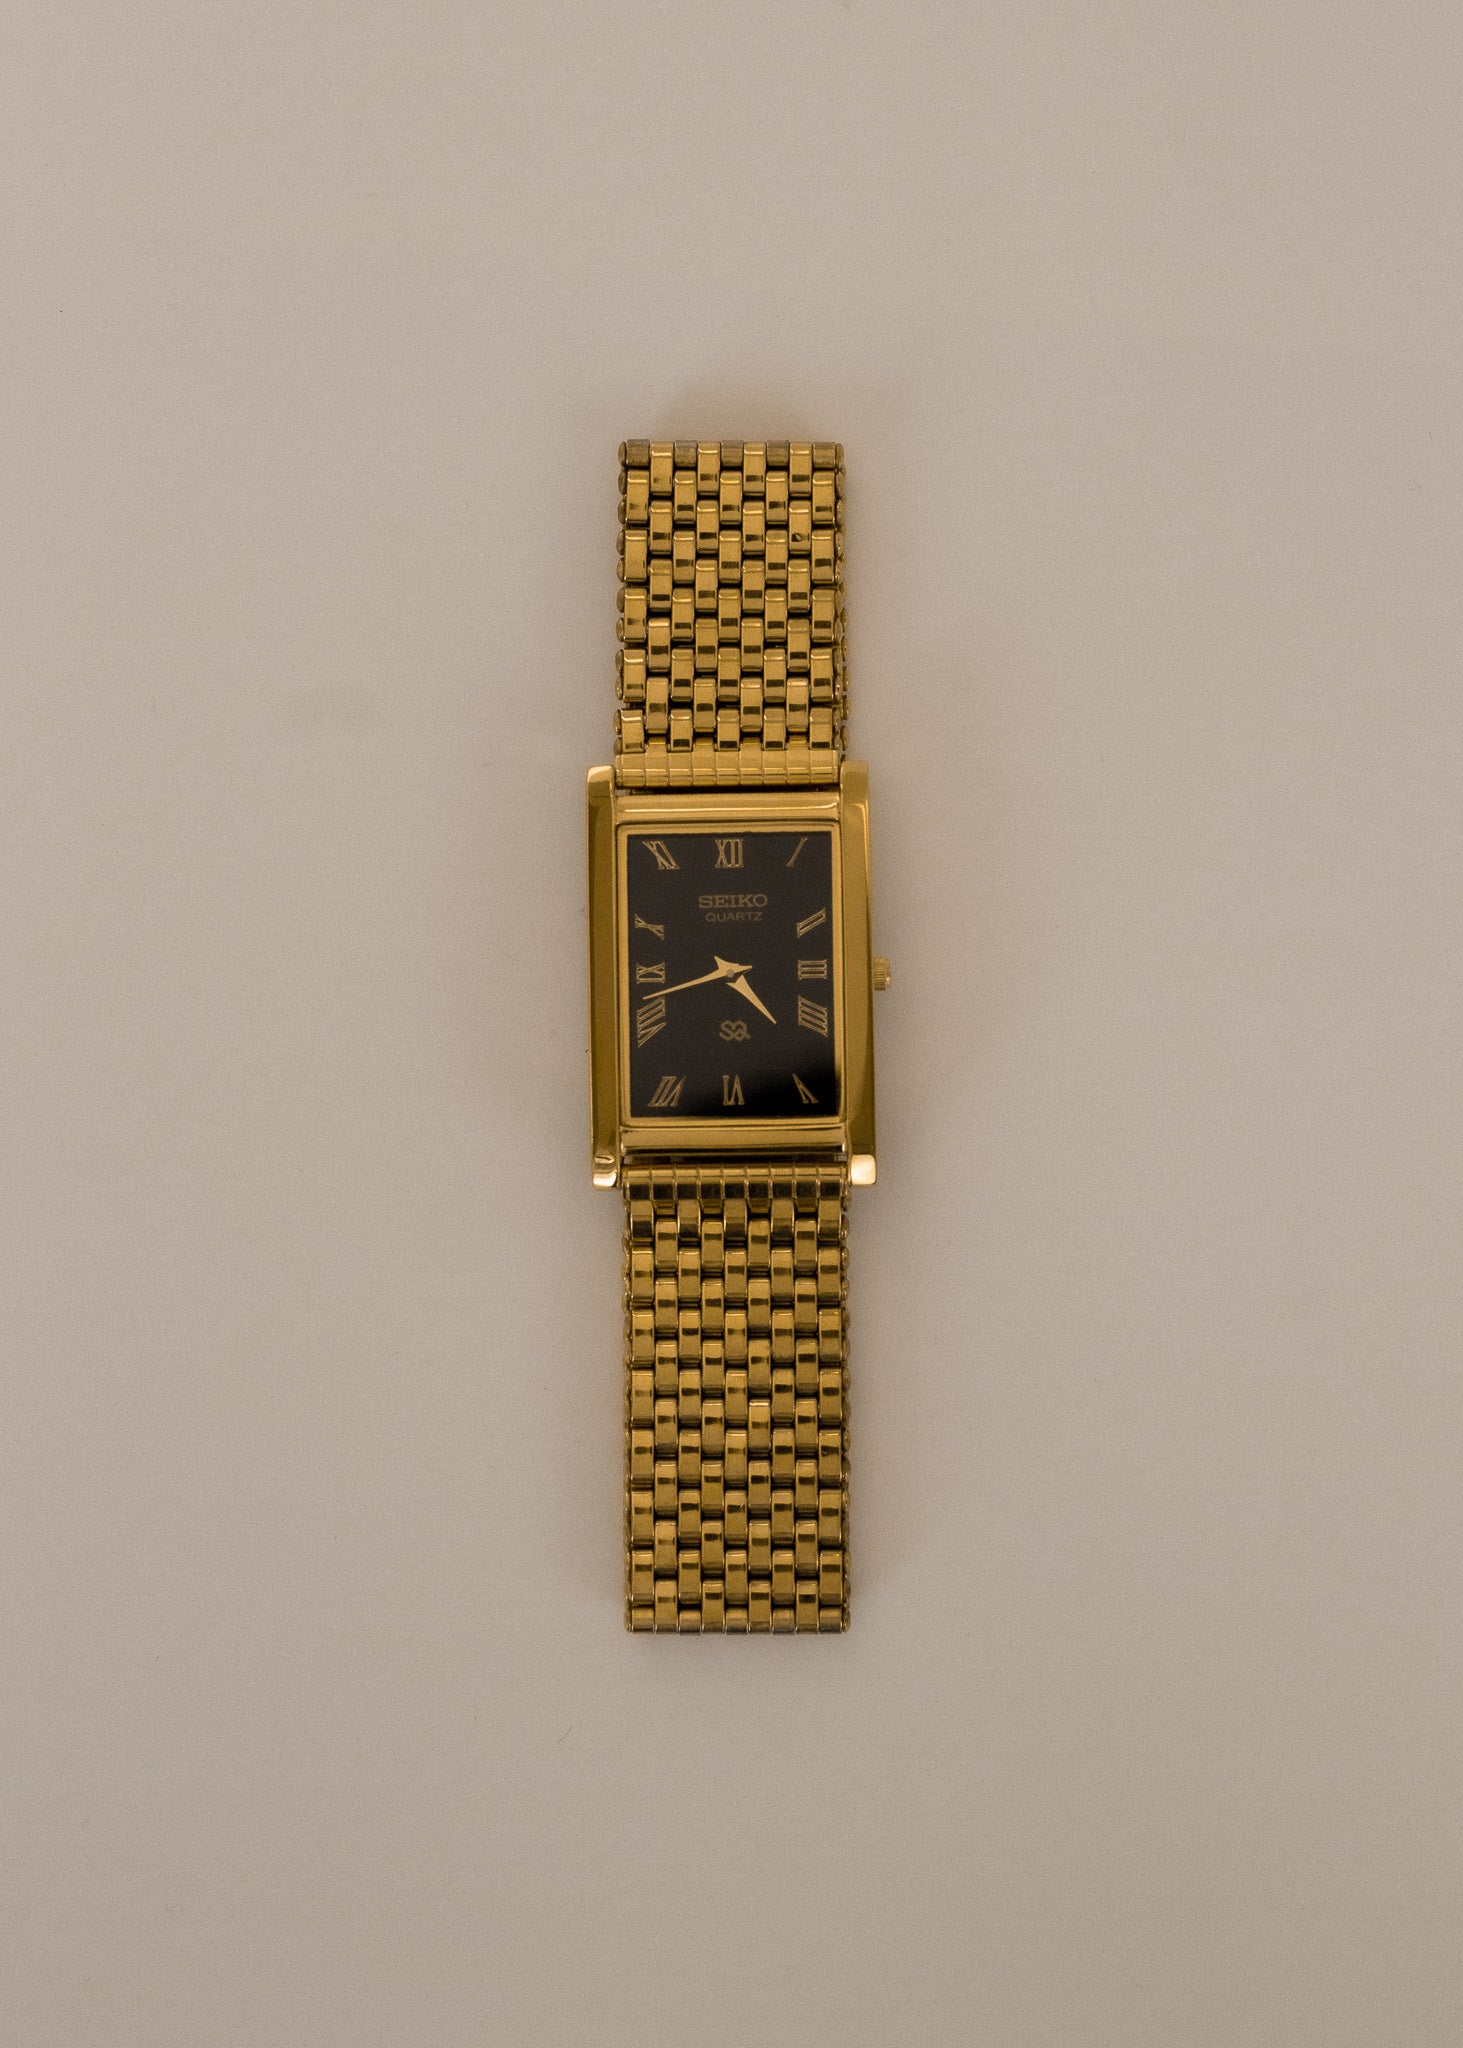 Vintage Seiko Watch Gold